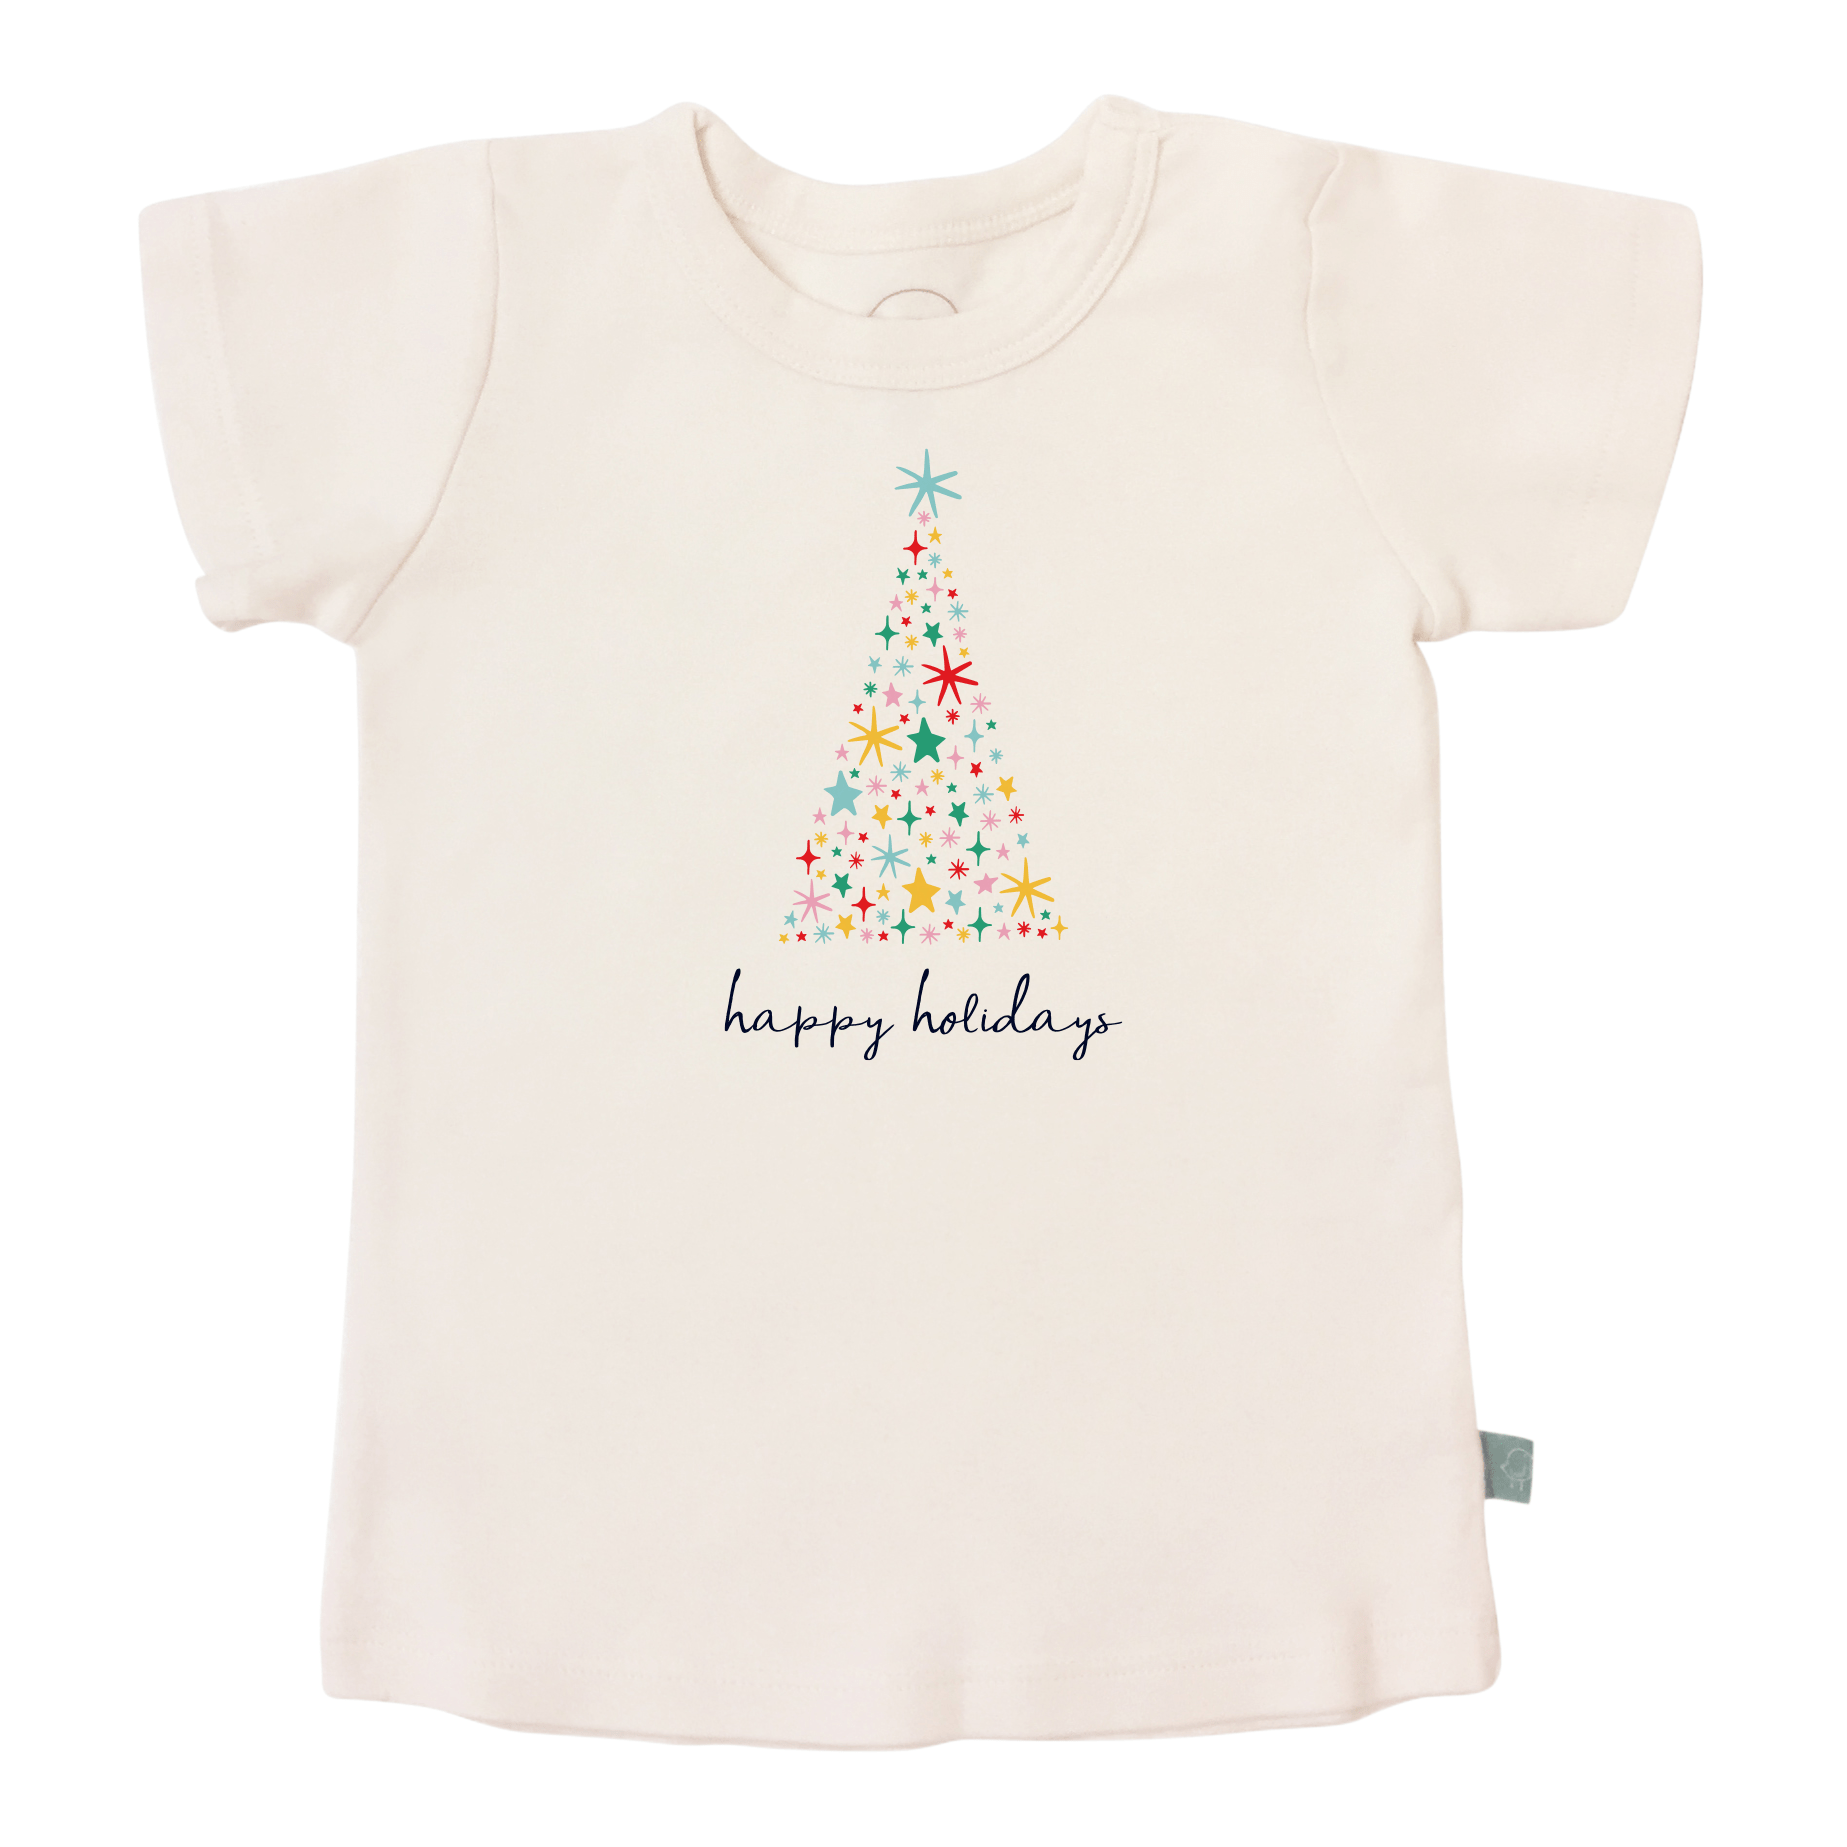 Finn & Emma Graphic Tee - Happy Holidays Tree